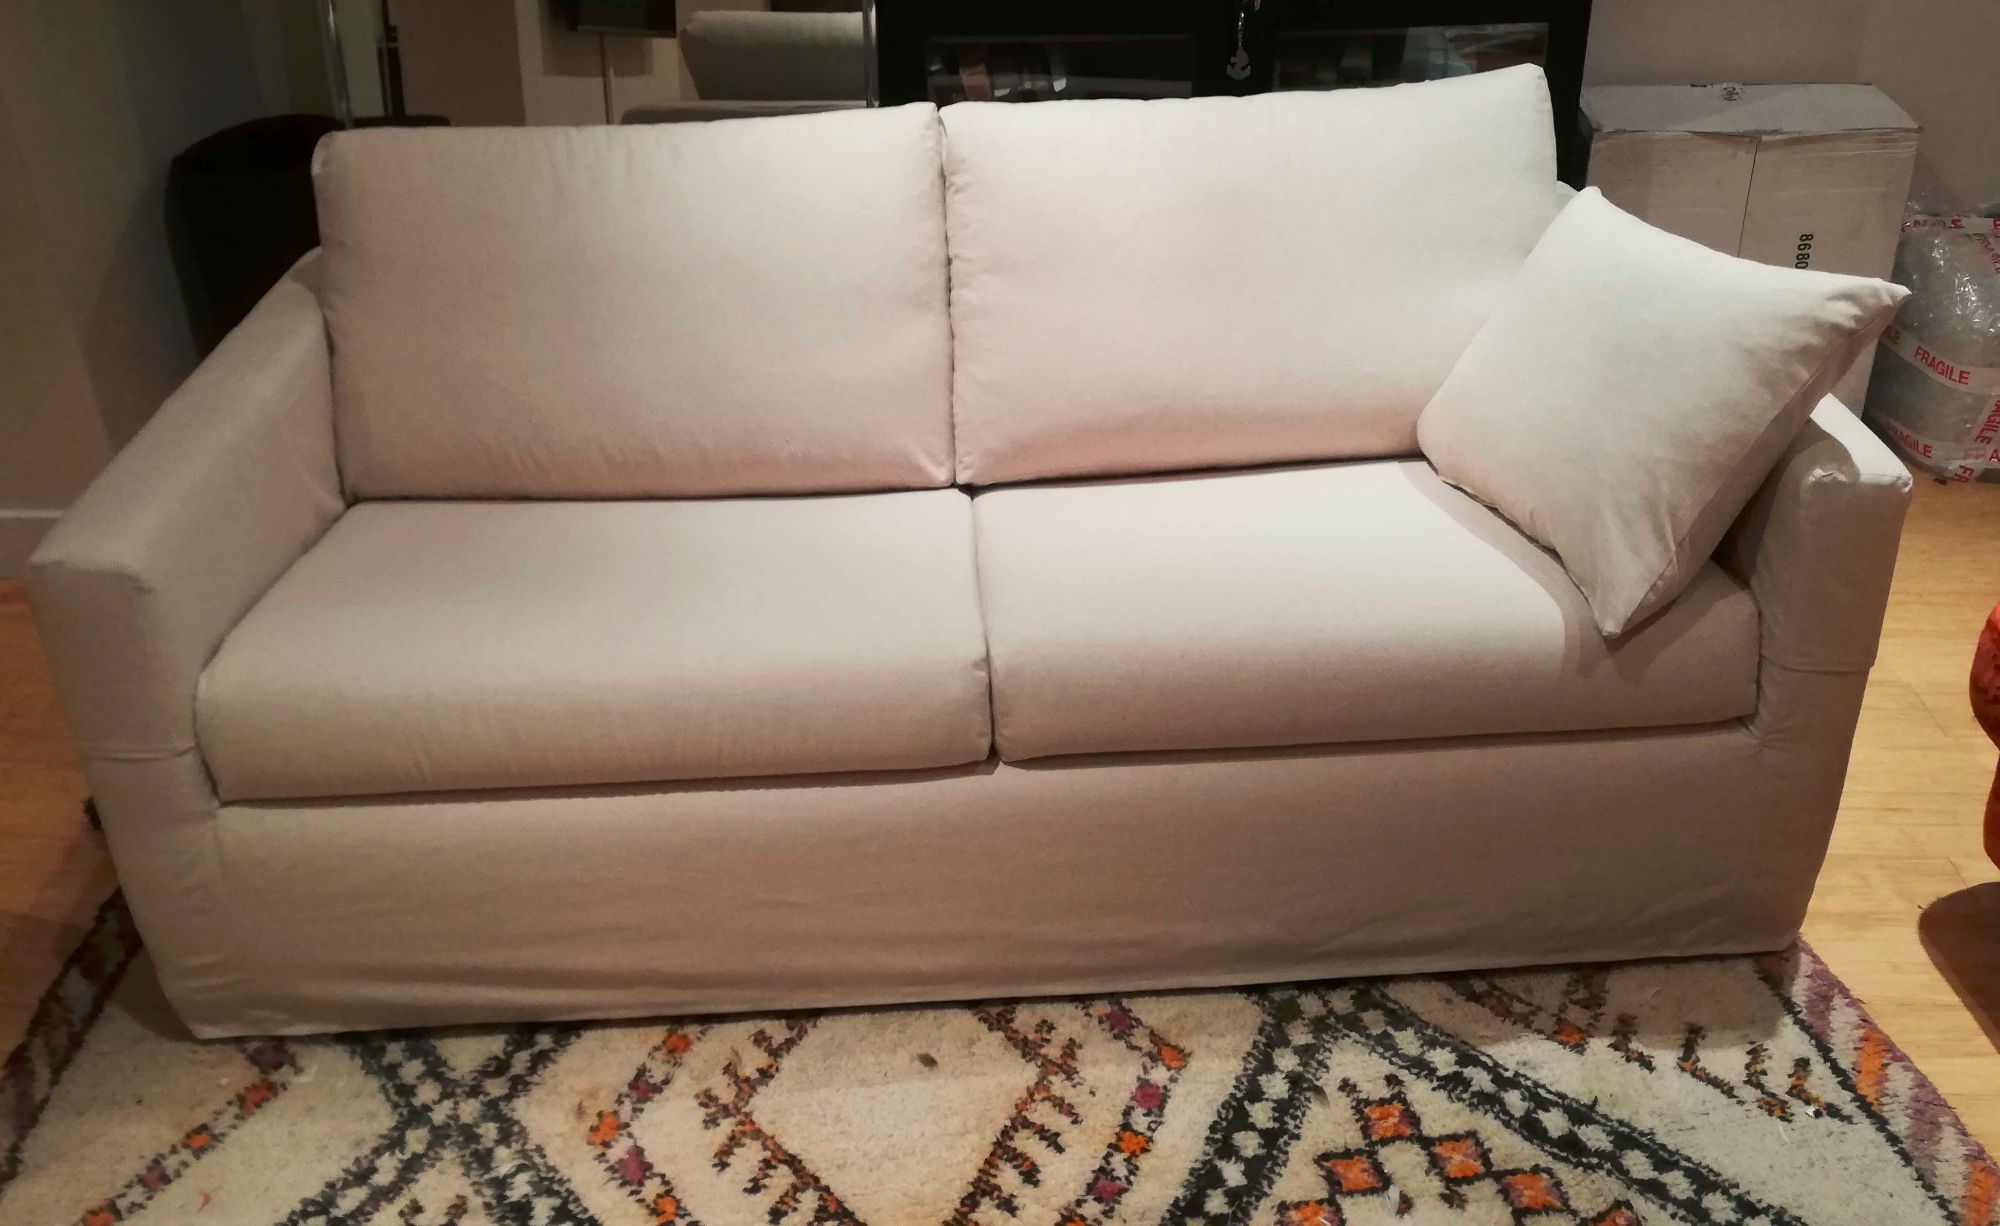 Cream loose sofa cover